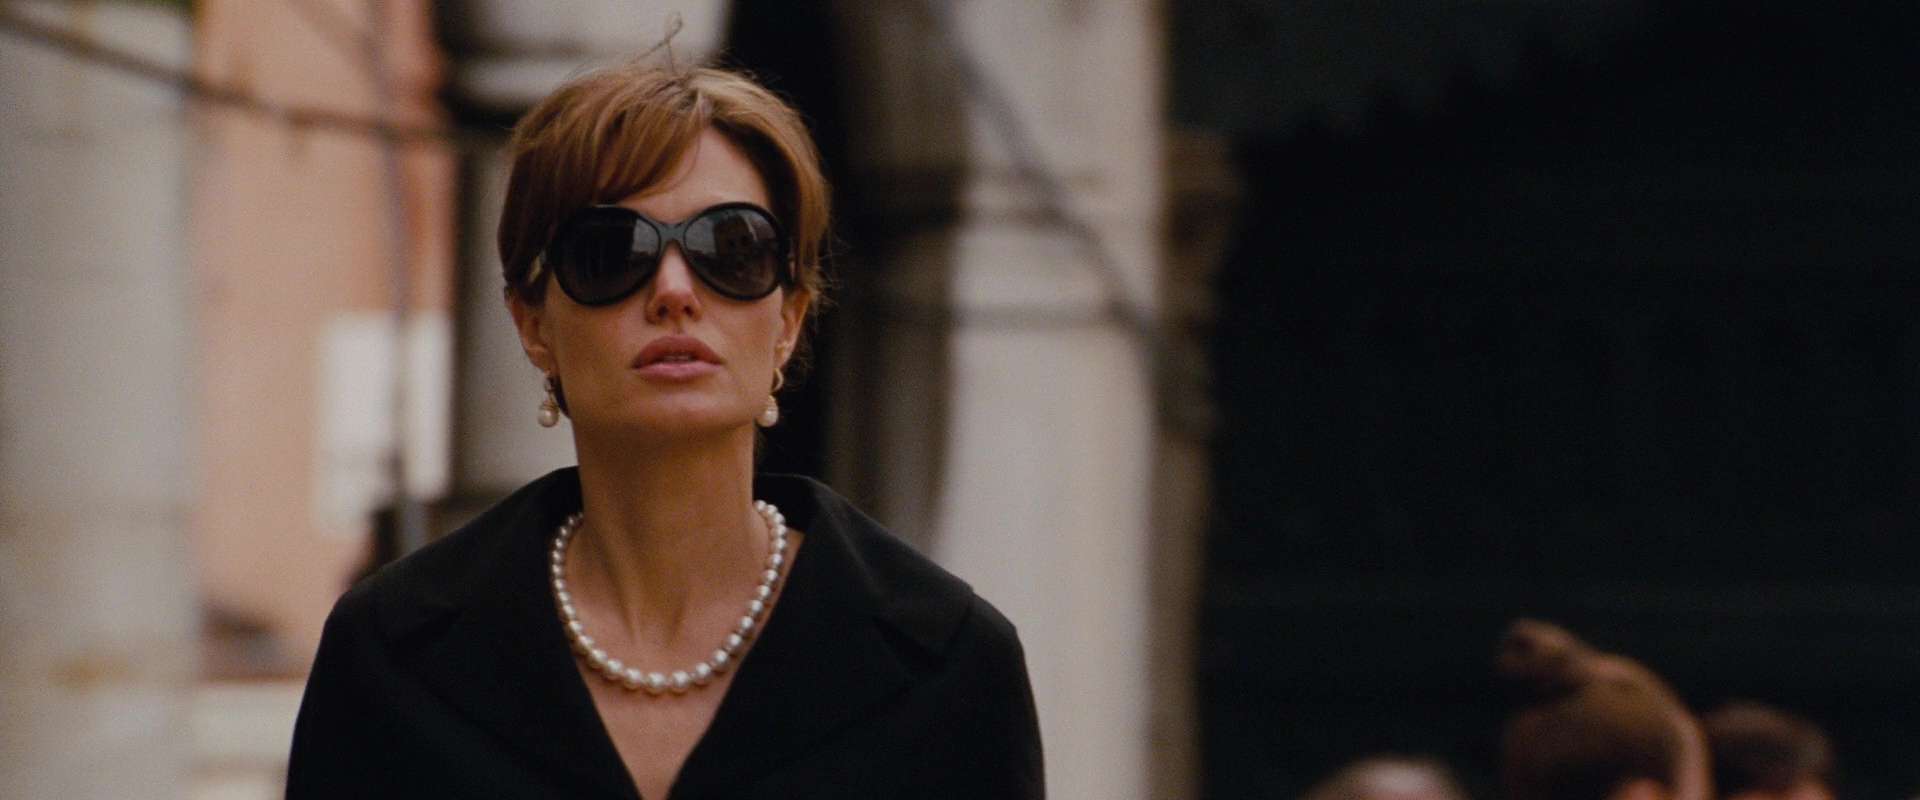 Angelina Jolie Wearing TD Tom Davies Sunglasses in The Tourist